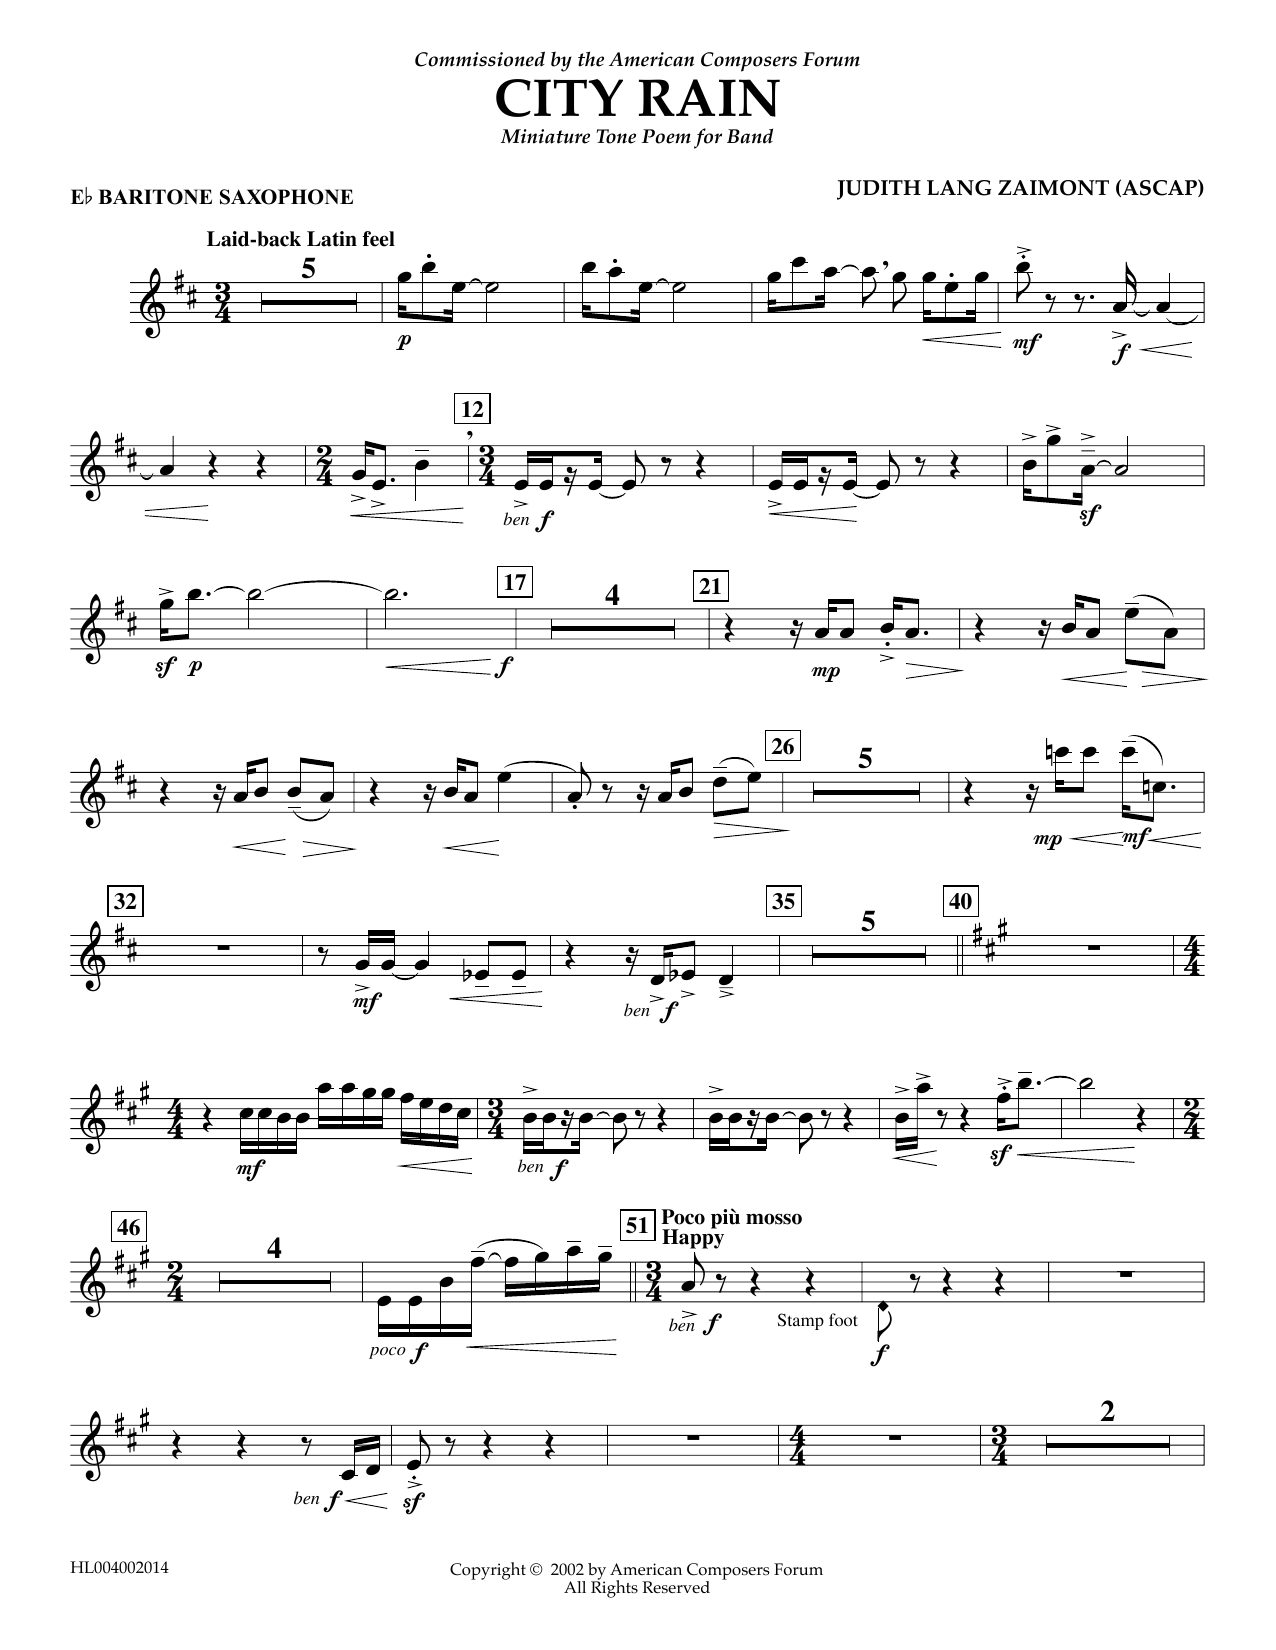 Download Judith Zaimont City Rain - Eb Baritone Saxophone Sheet Music